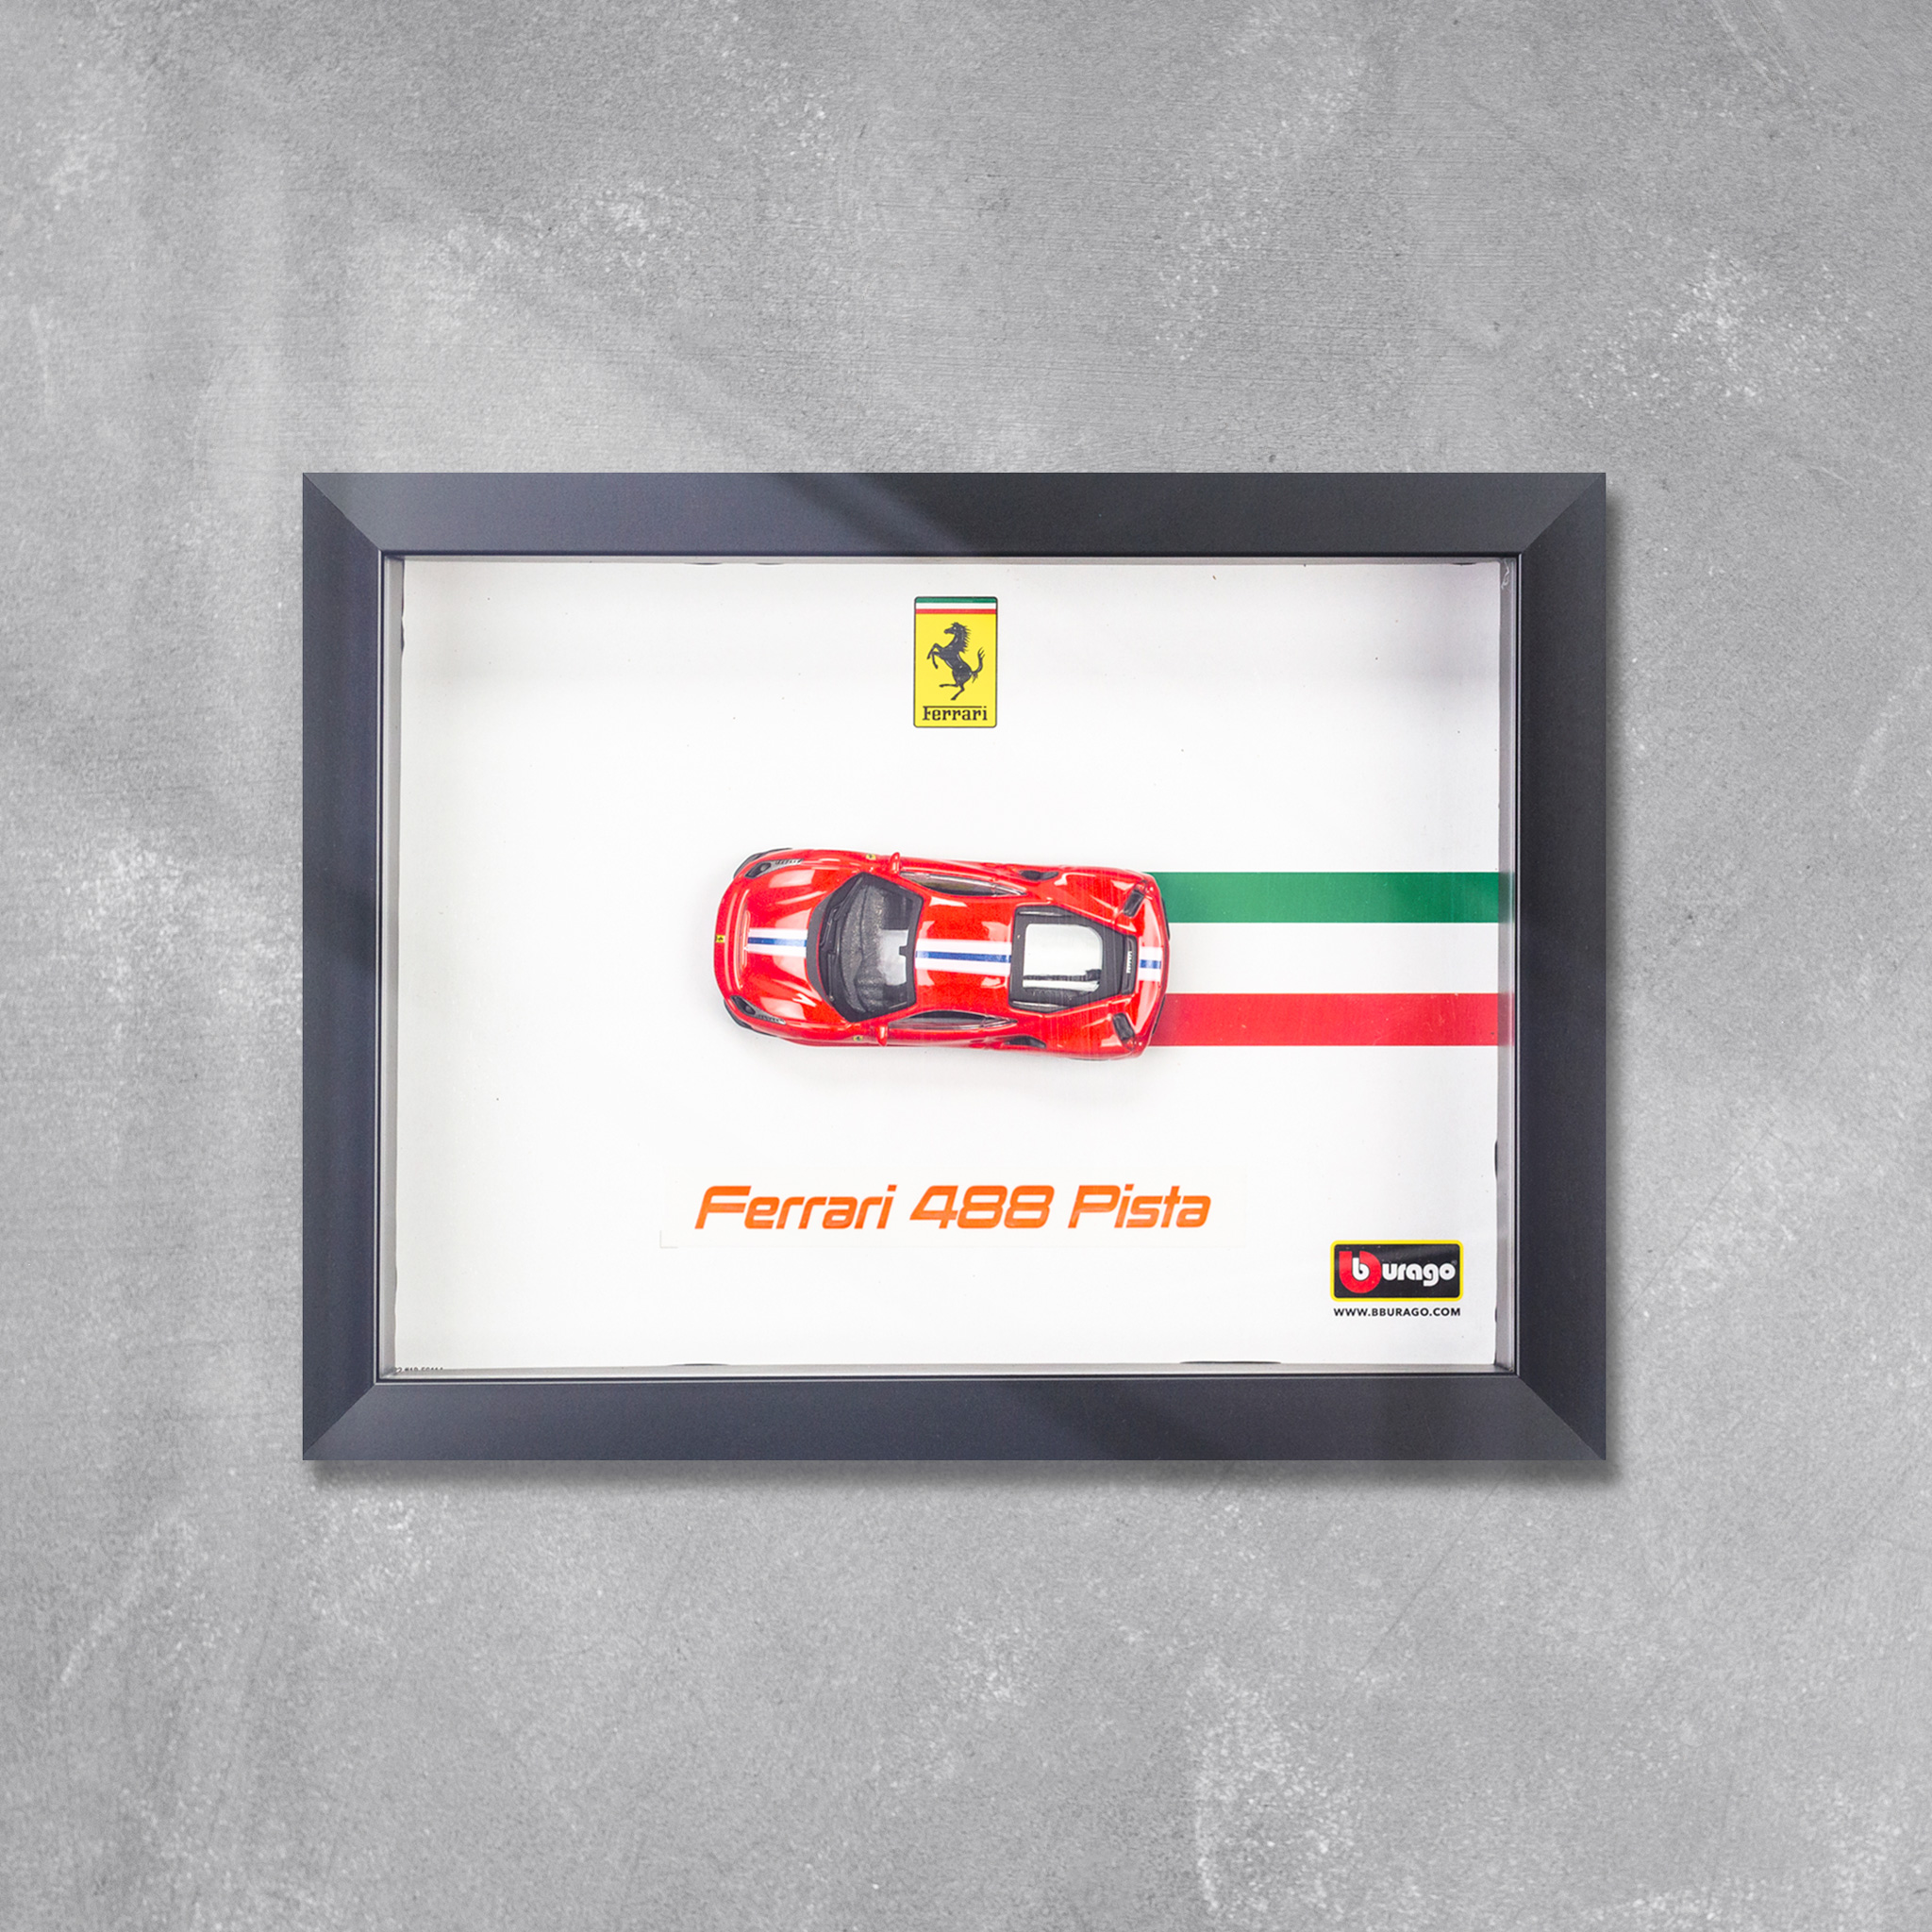 Khung tranh mô hình xe Ferrari 488 Pista 1:64 Bburago